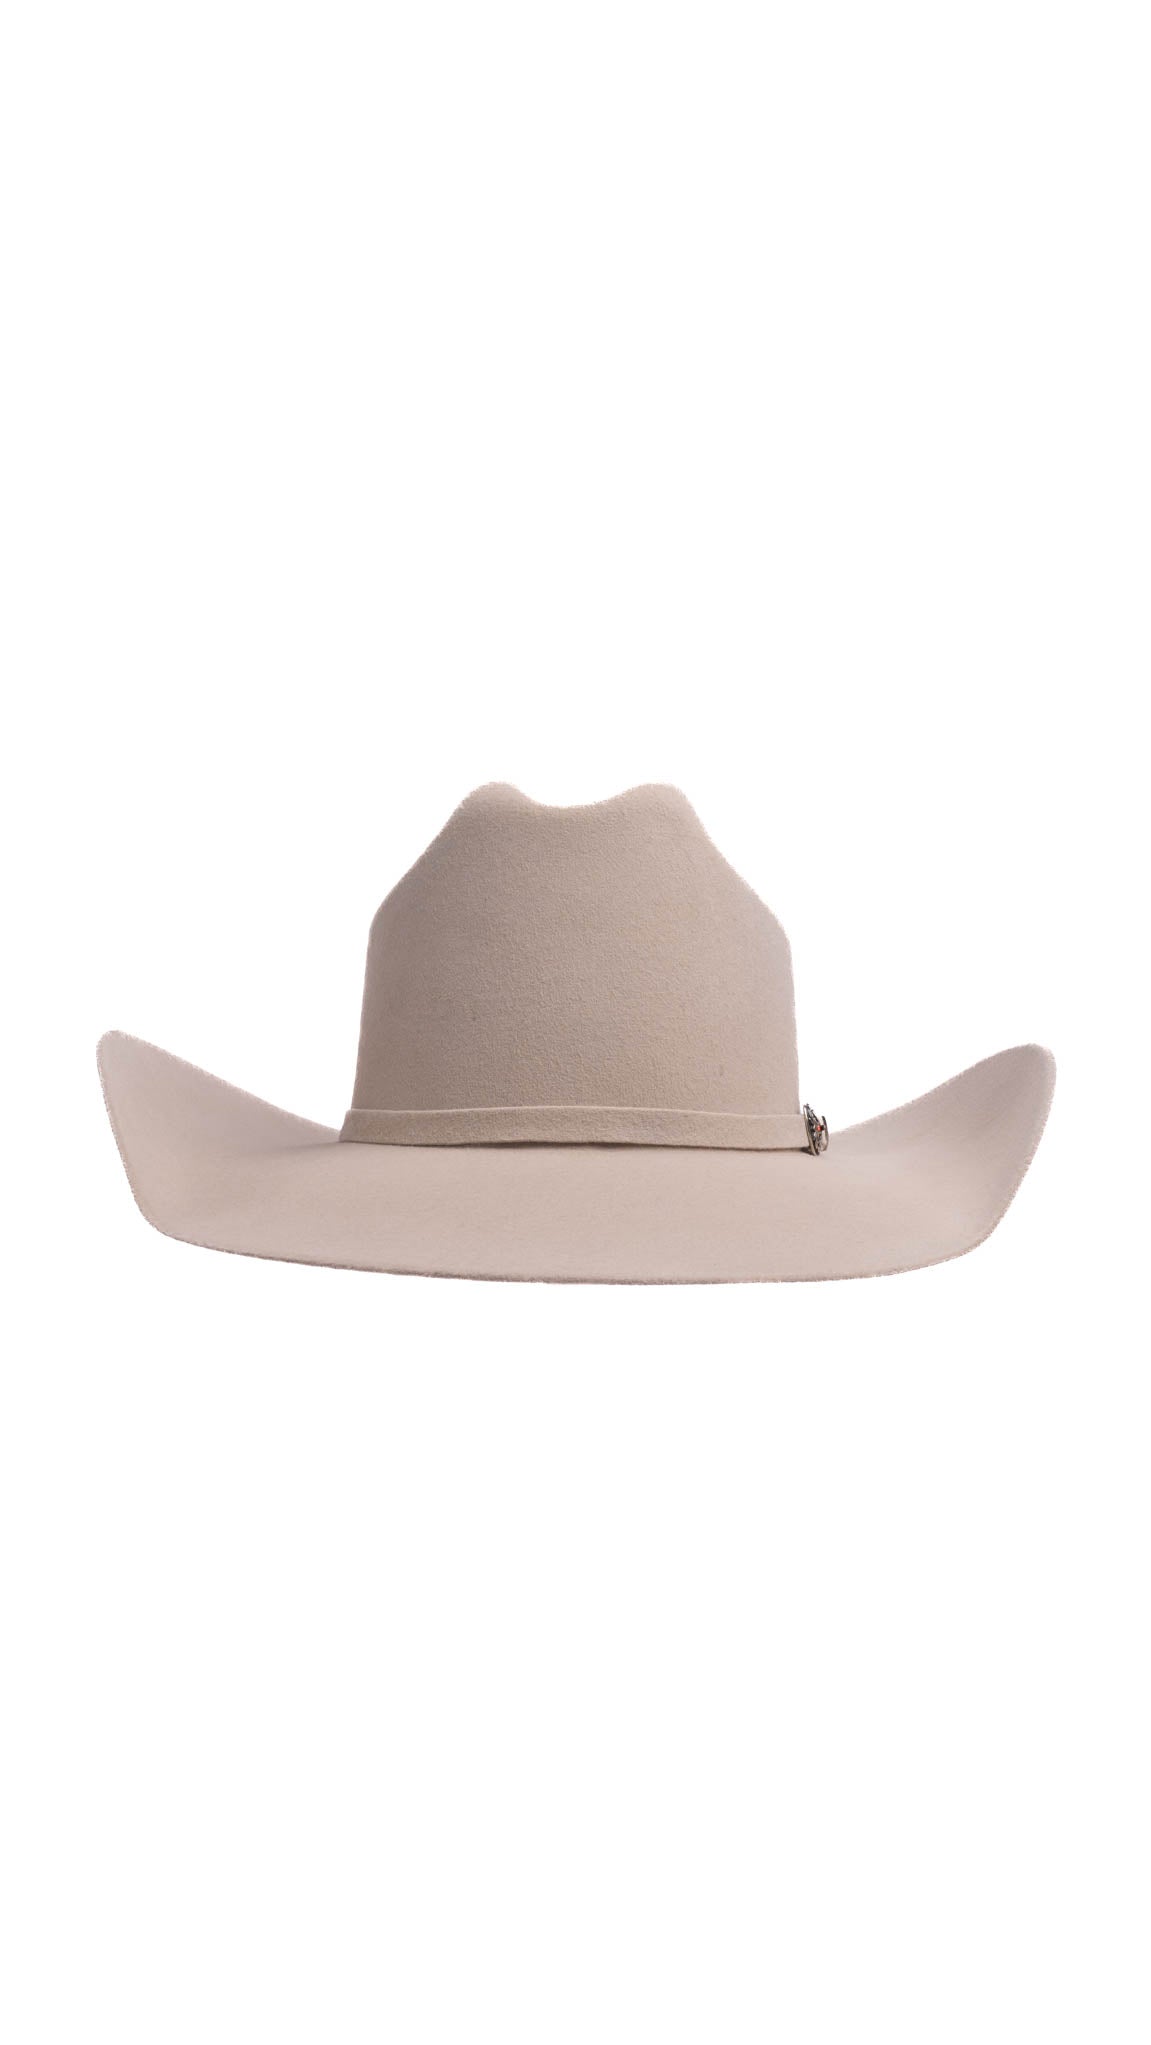 Rock'em Country Malboro 6X Felt Hat